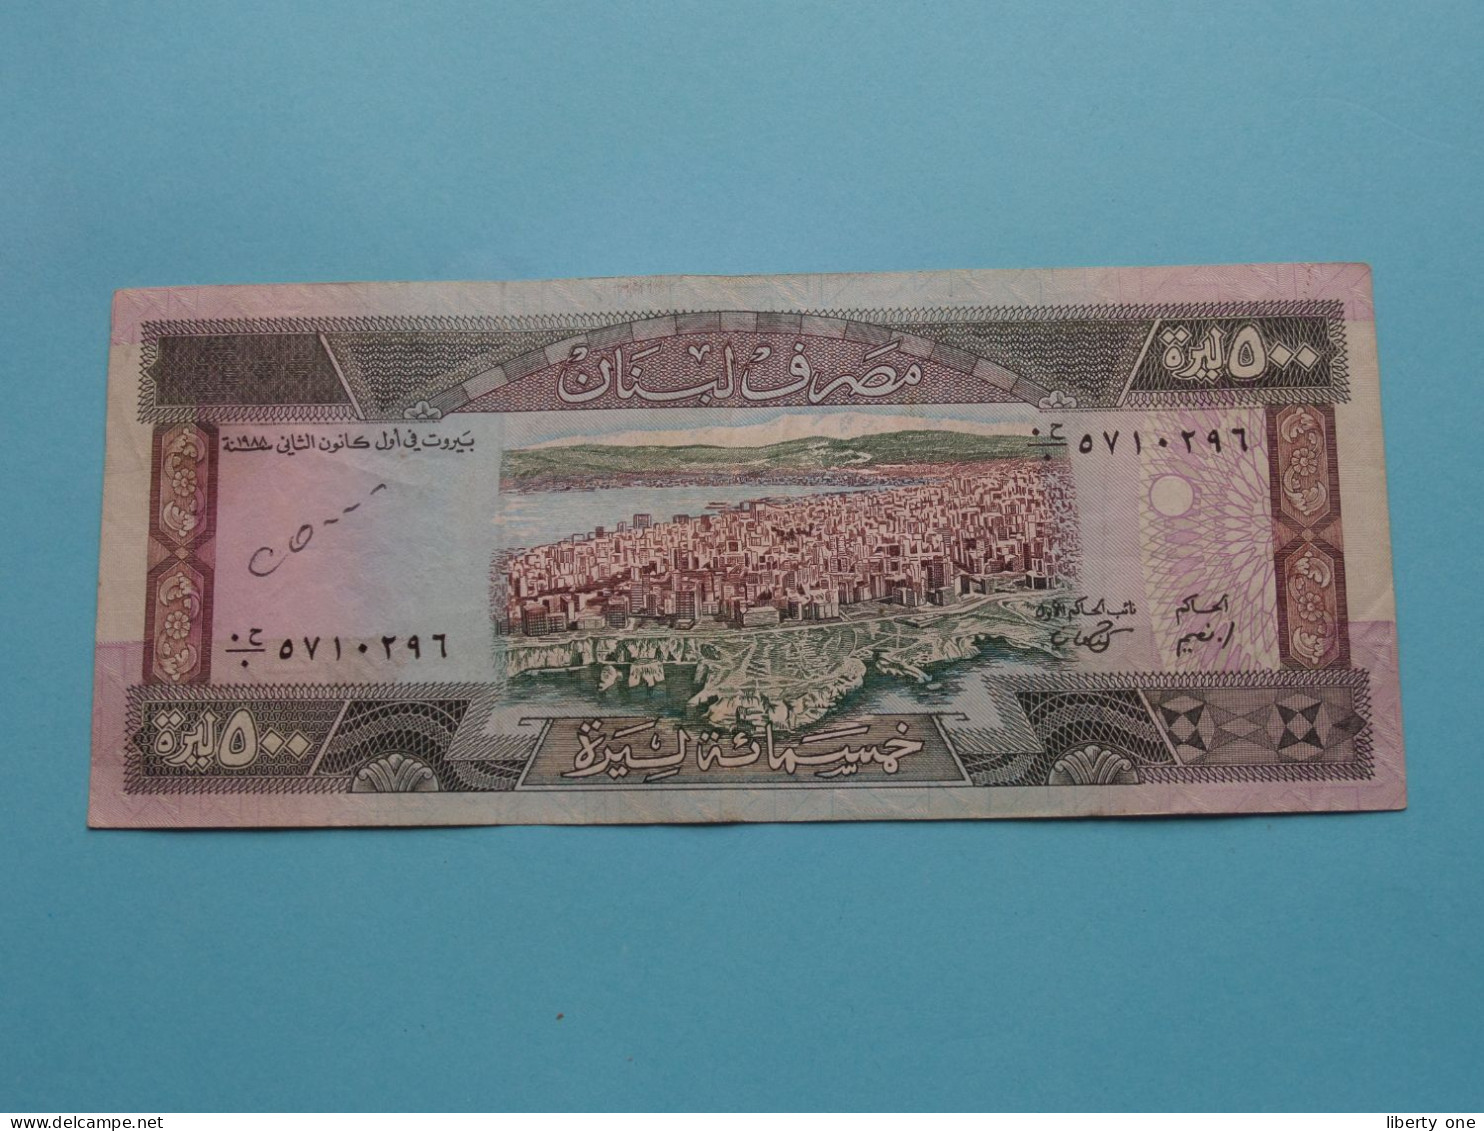 1988 - 500 Livres Mille ( Banque De Liban ) Lebanon 1988 ( For Grade, Please See SCANS ) Used ! - Libanon